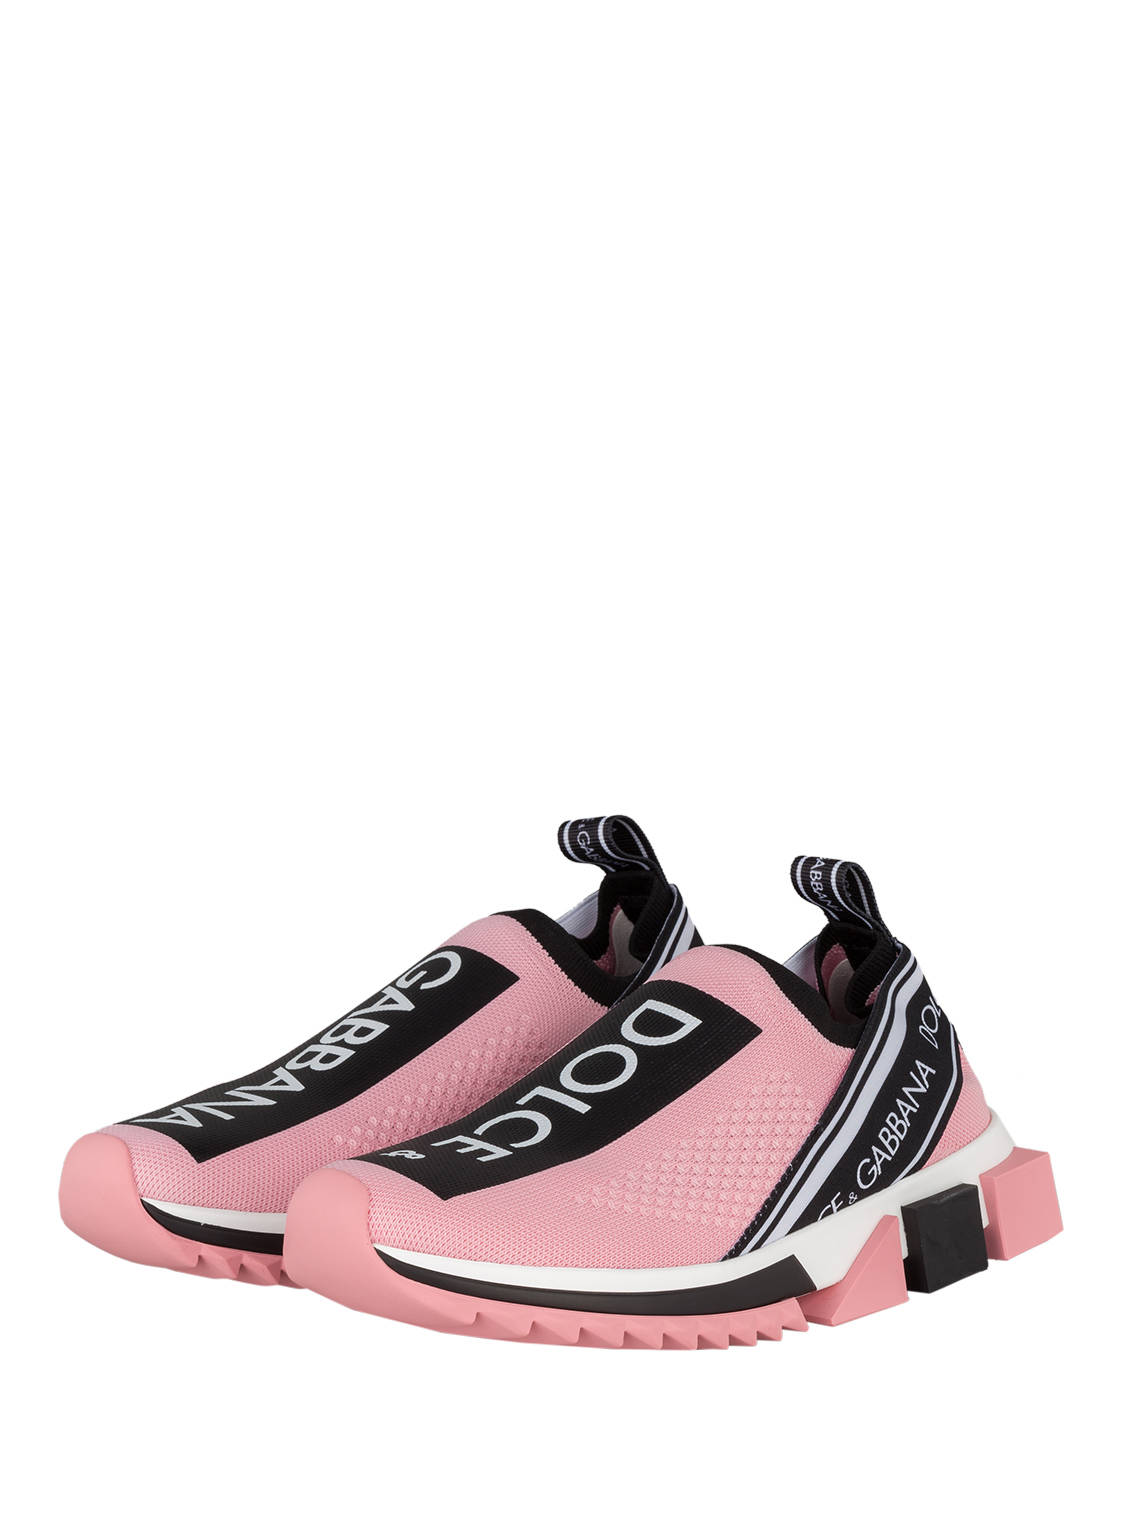 Dolce & Gabbana Slip-On-Sneaker Sorrento pink